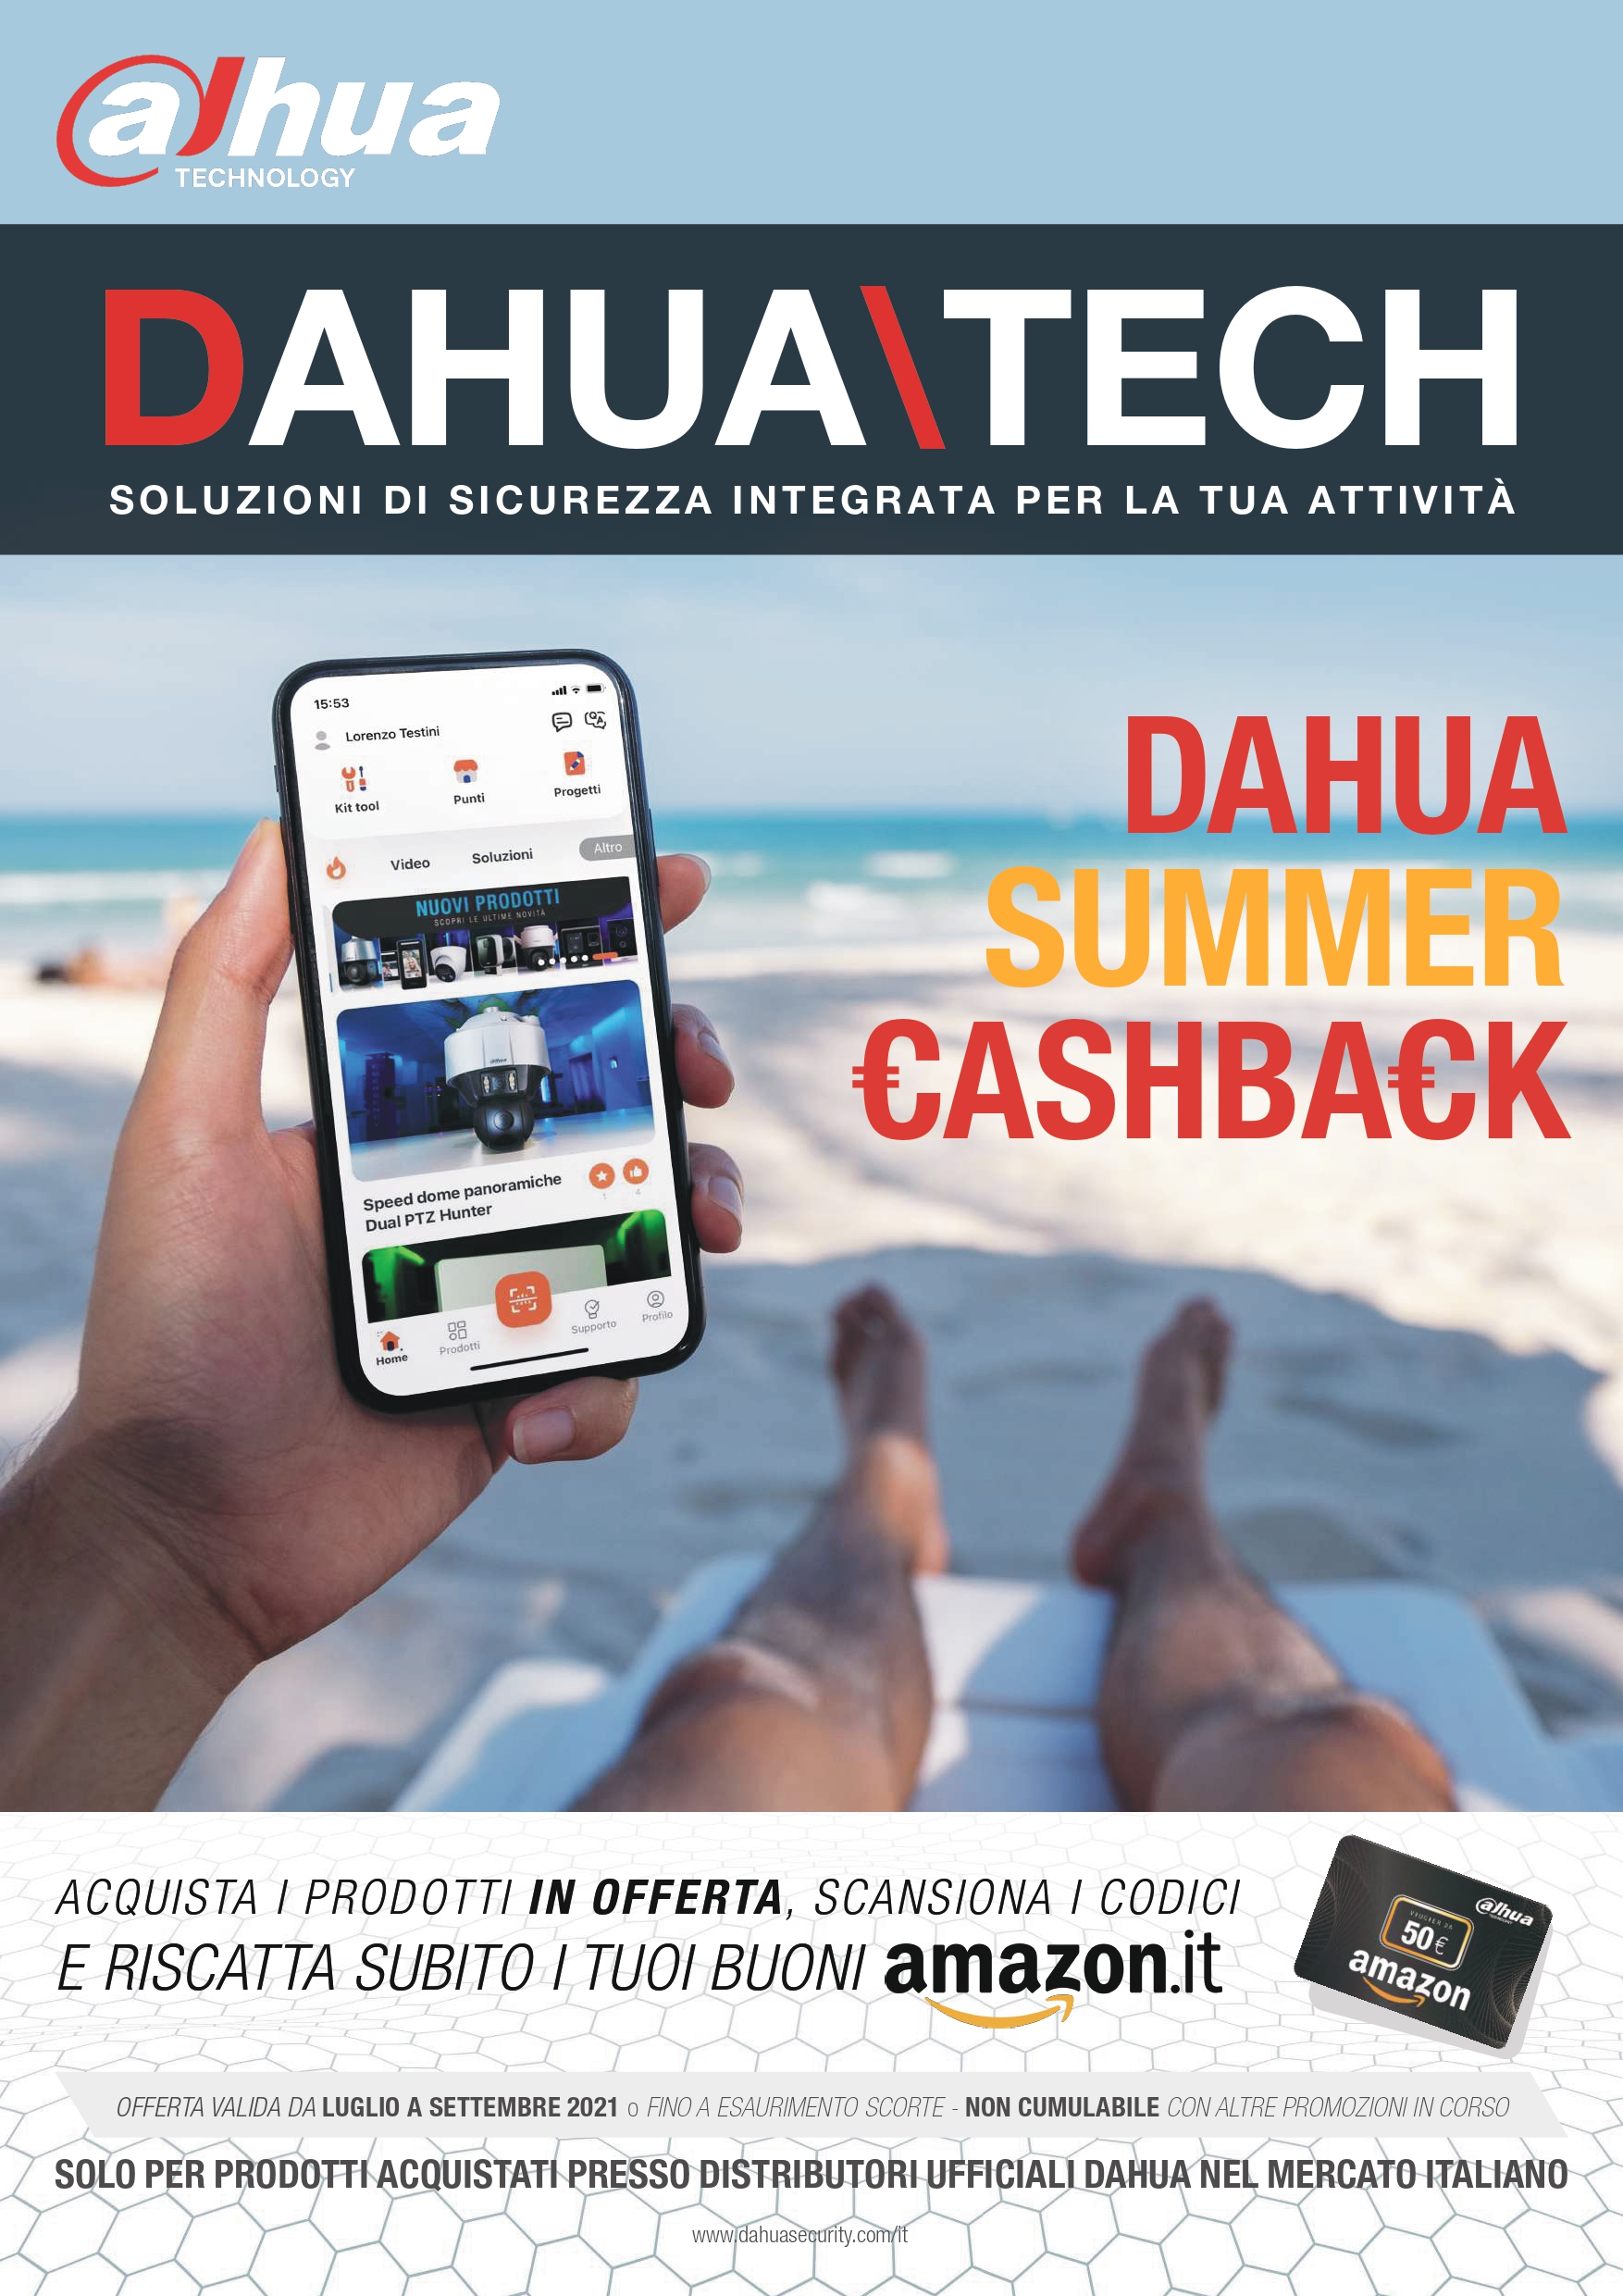 Dahua Technology AcuPick